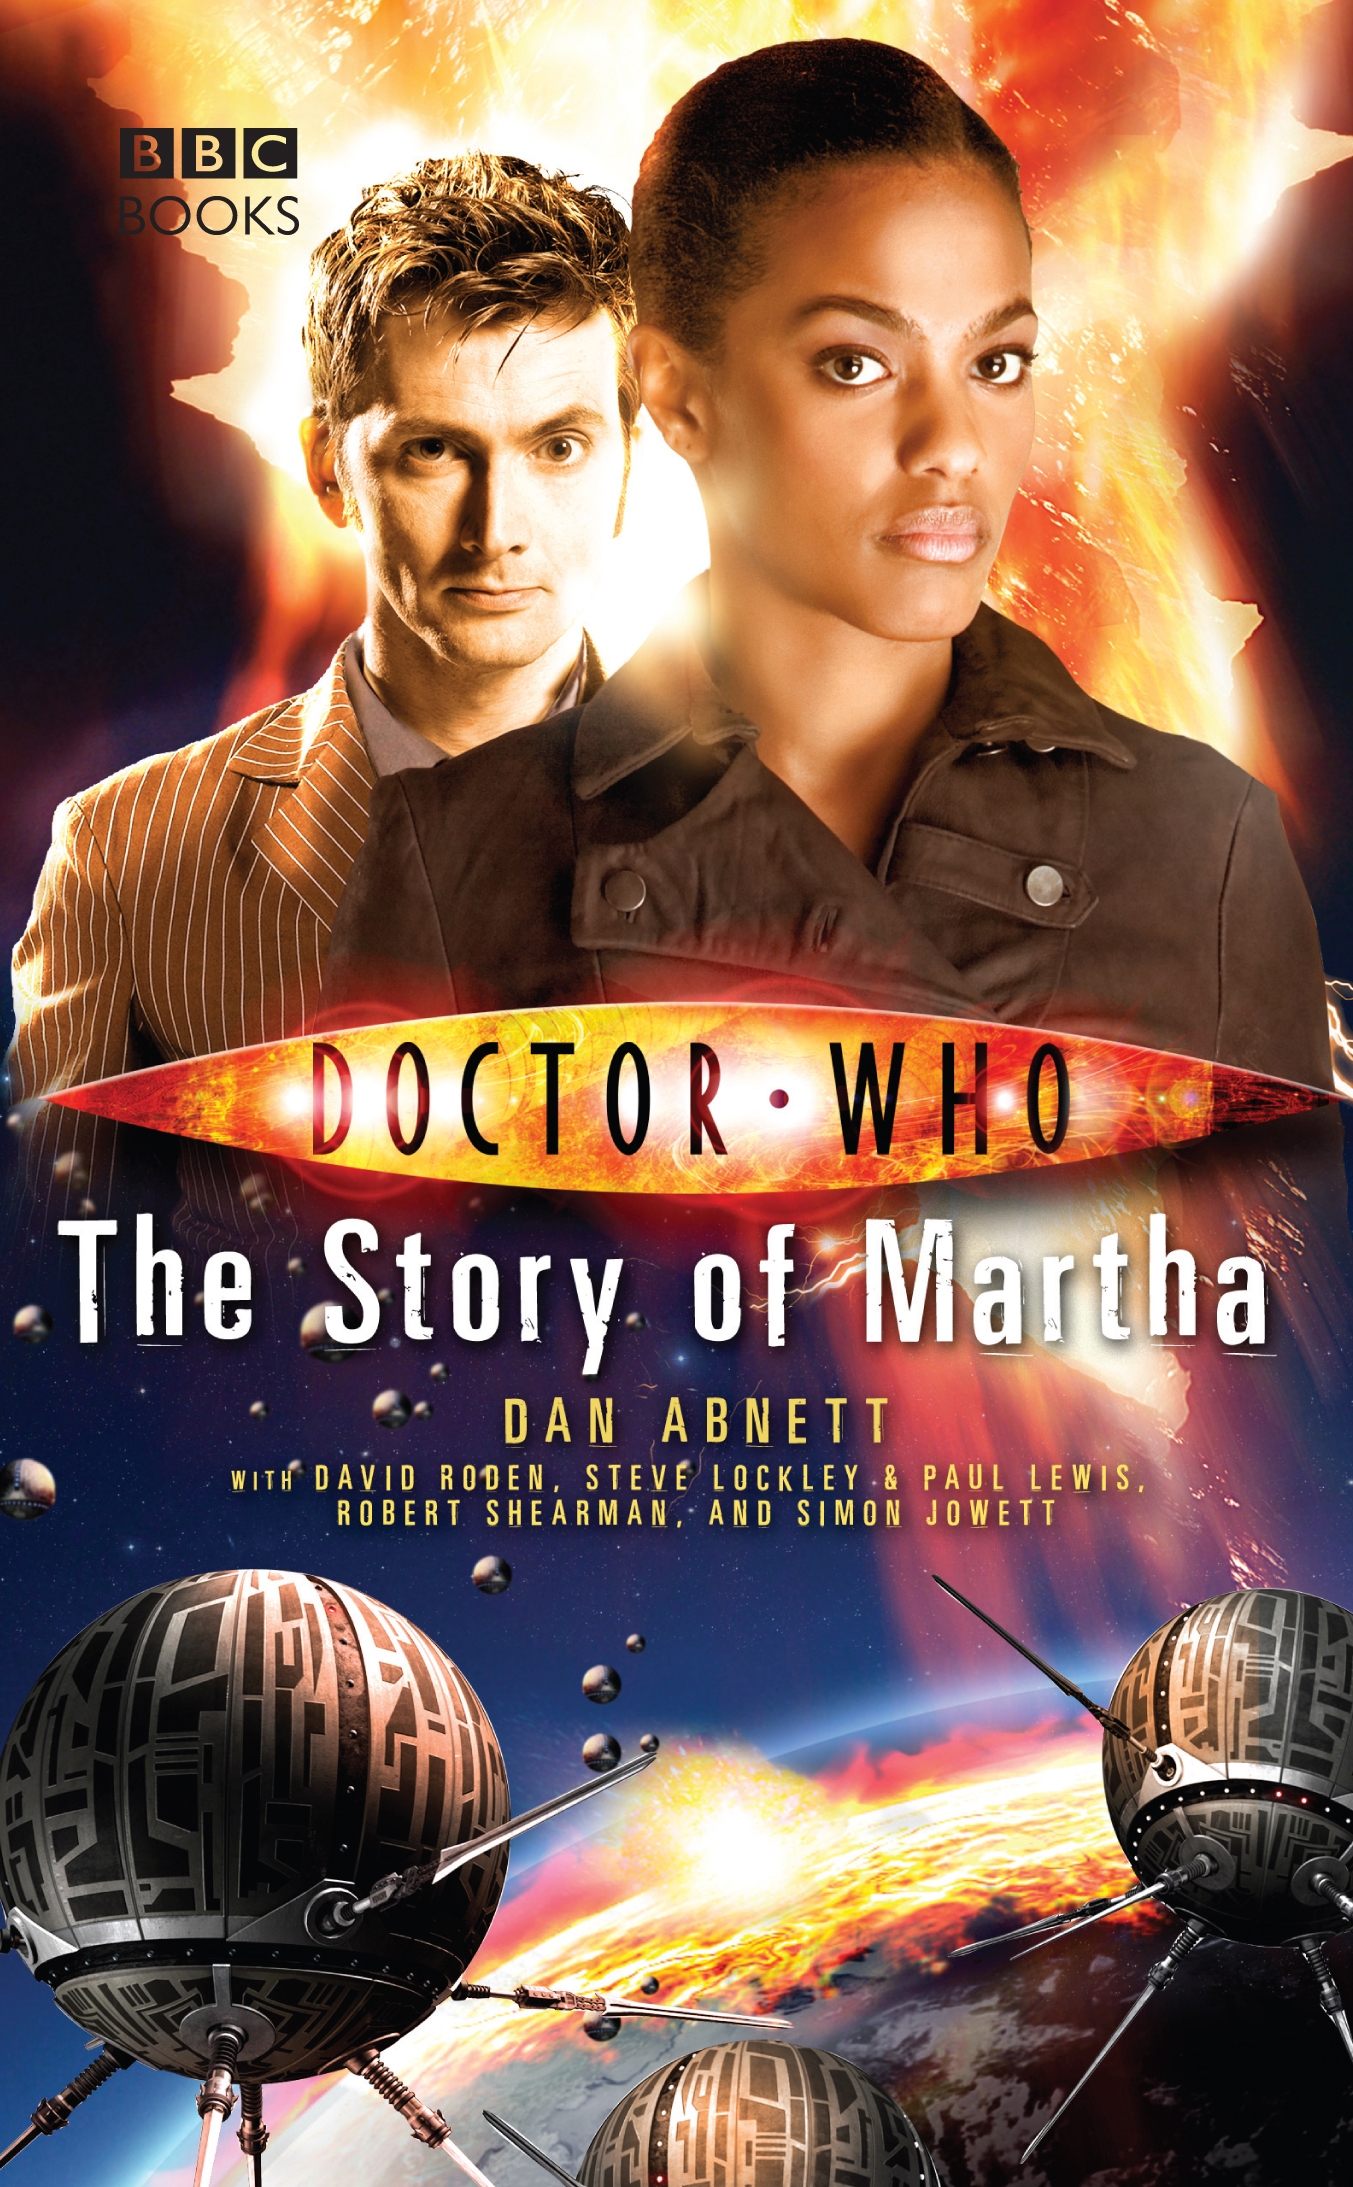 Doctor Who The Story of Martha by Dan Penguin Books Australia